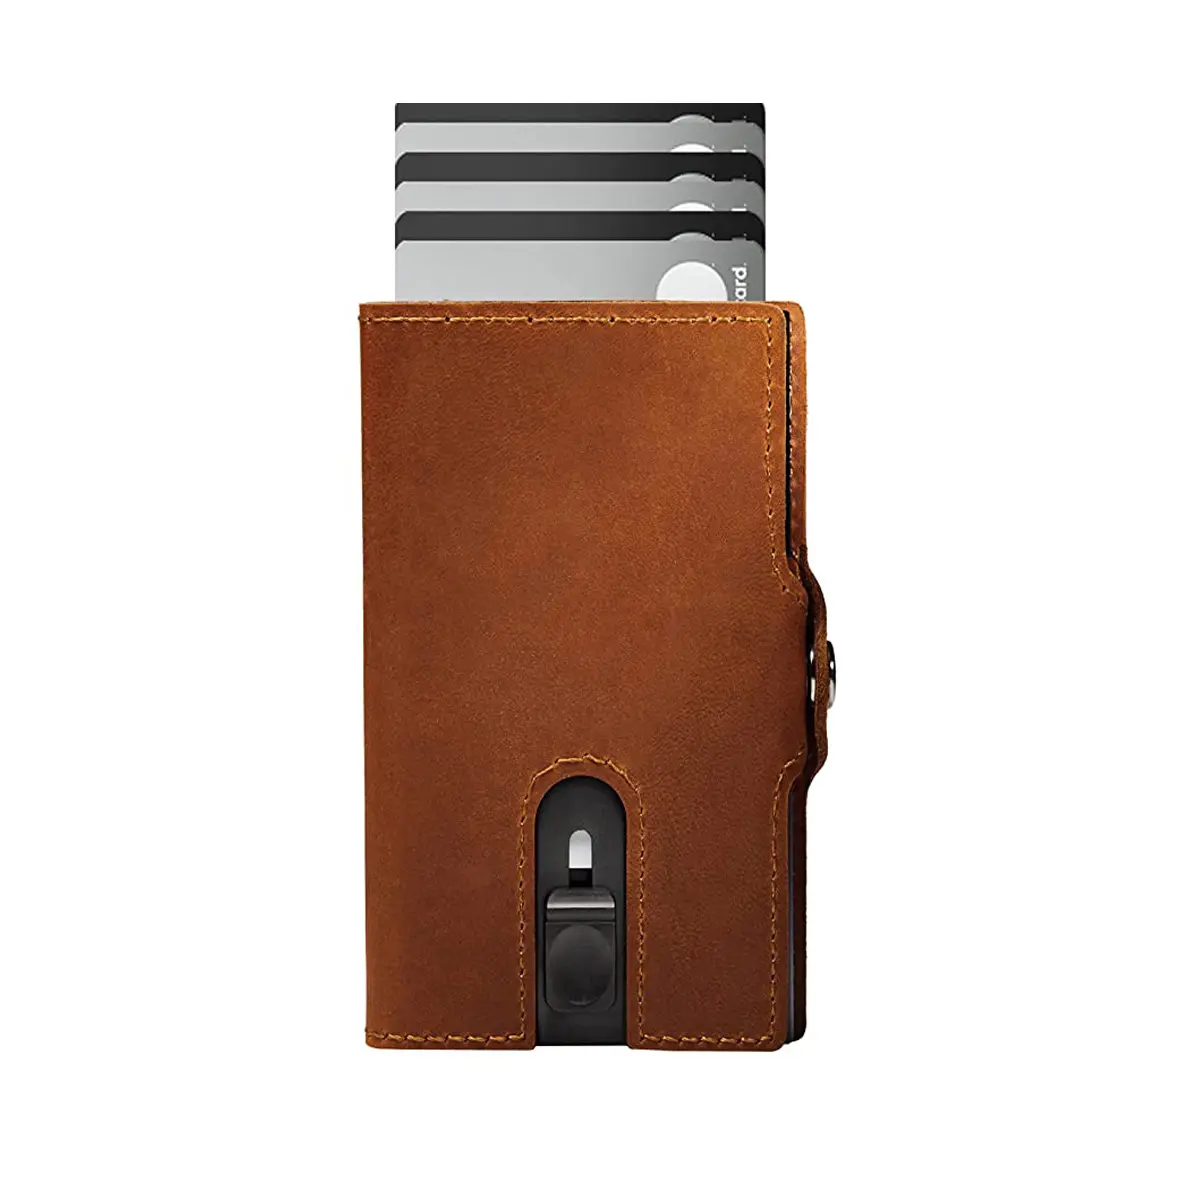 Ccoin-cartera de diseñador para hombre, tarjetero de lujo, billetera de cuero con soporte para bolígrafo, Europa múltiple